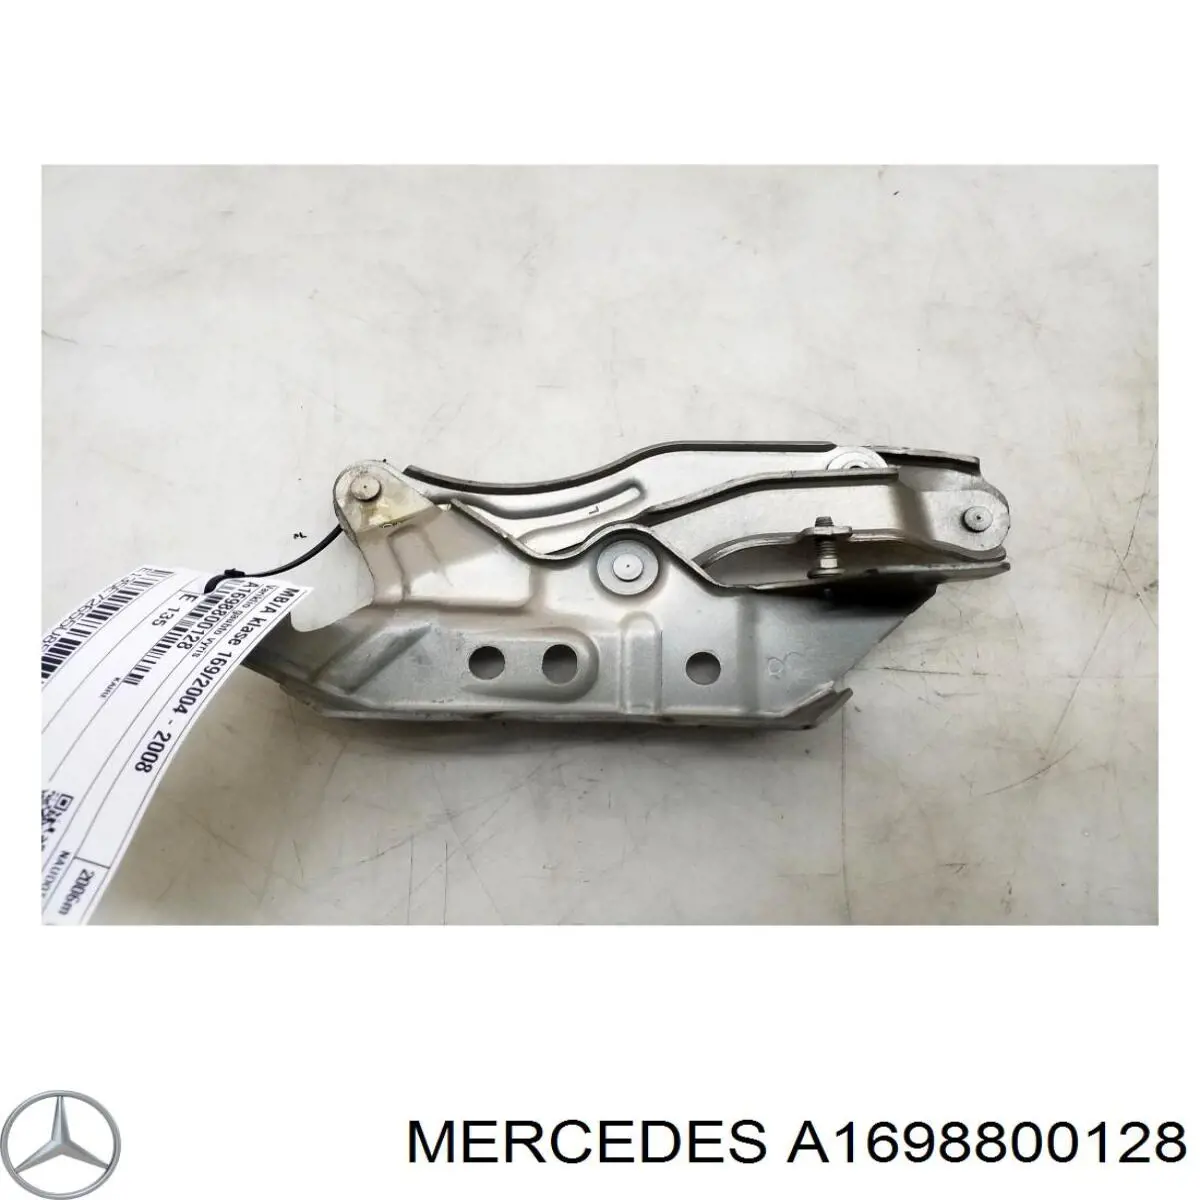 A1698800128 Mercedes 